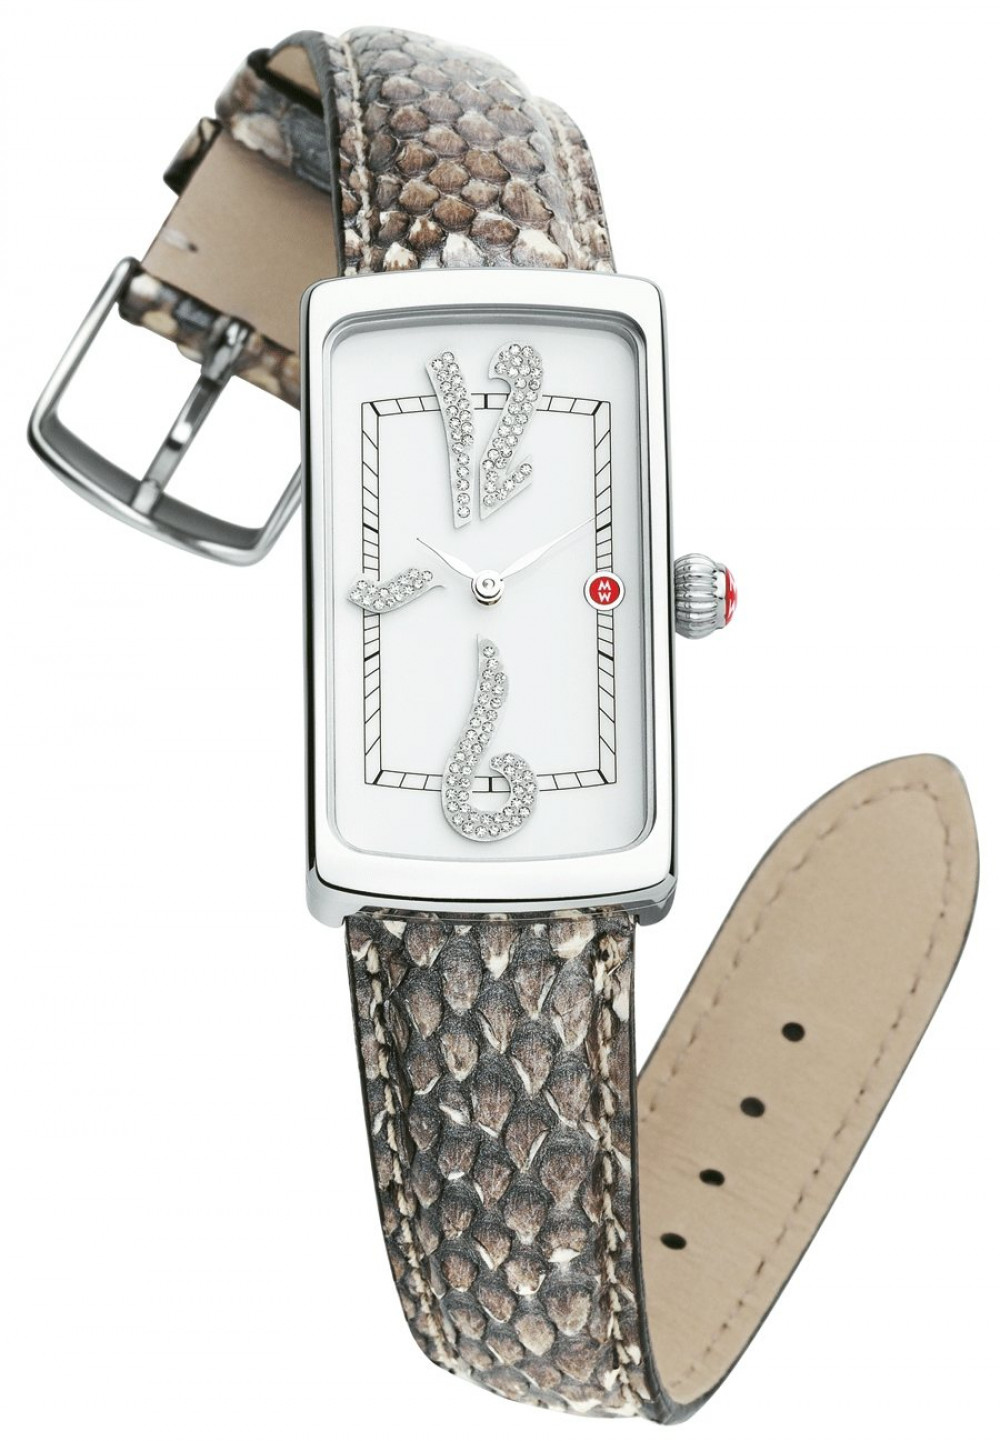 Zegarek firmy Michele Watches, model Attitude